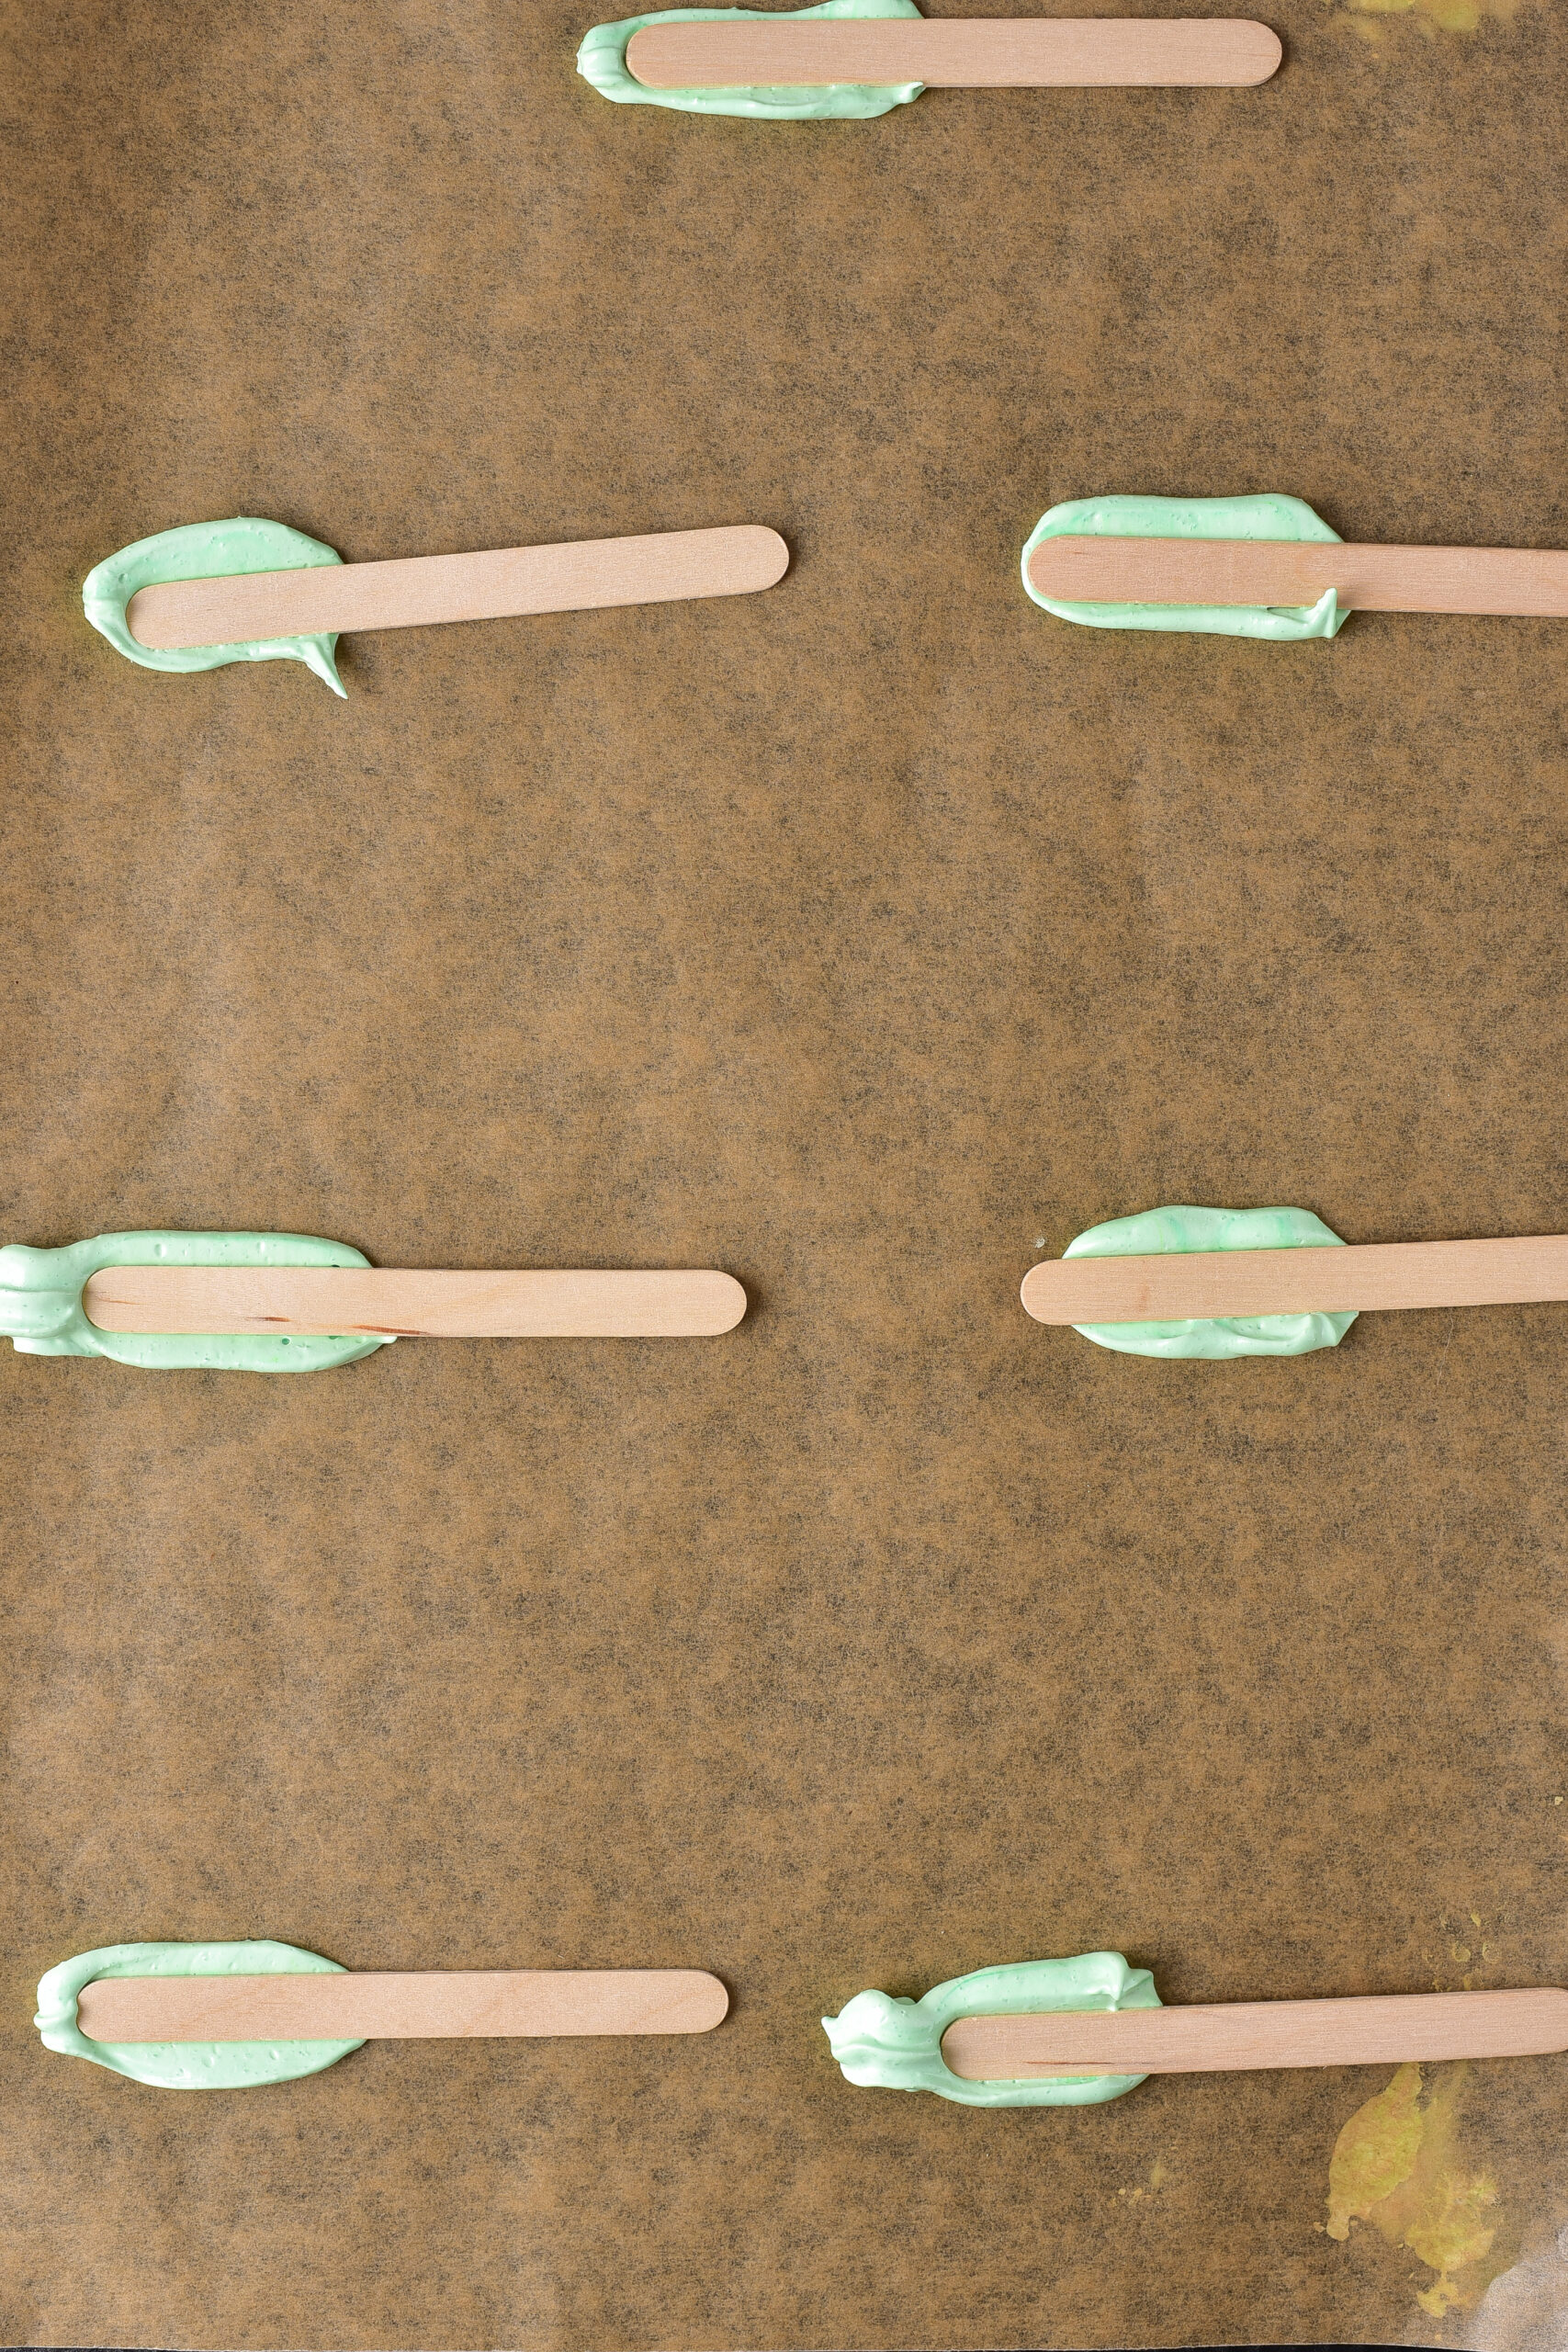 popsicle sticks on meringue